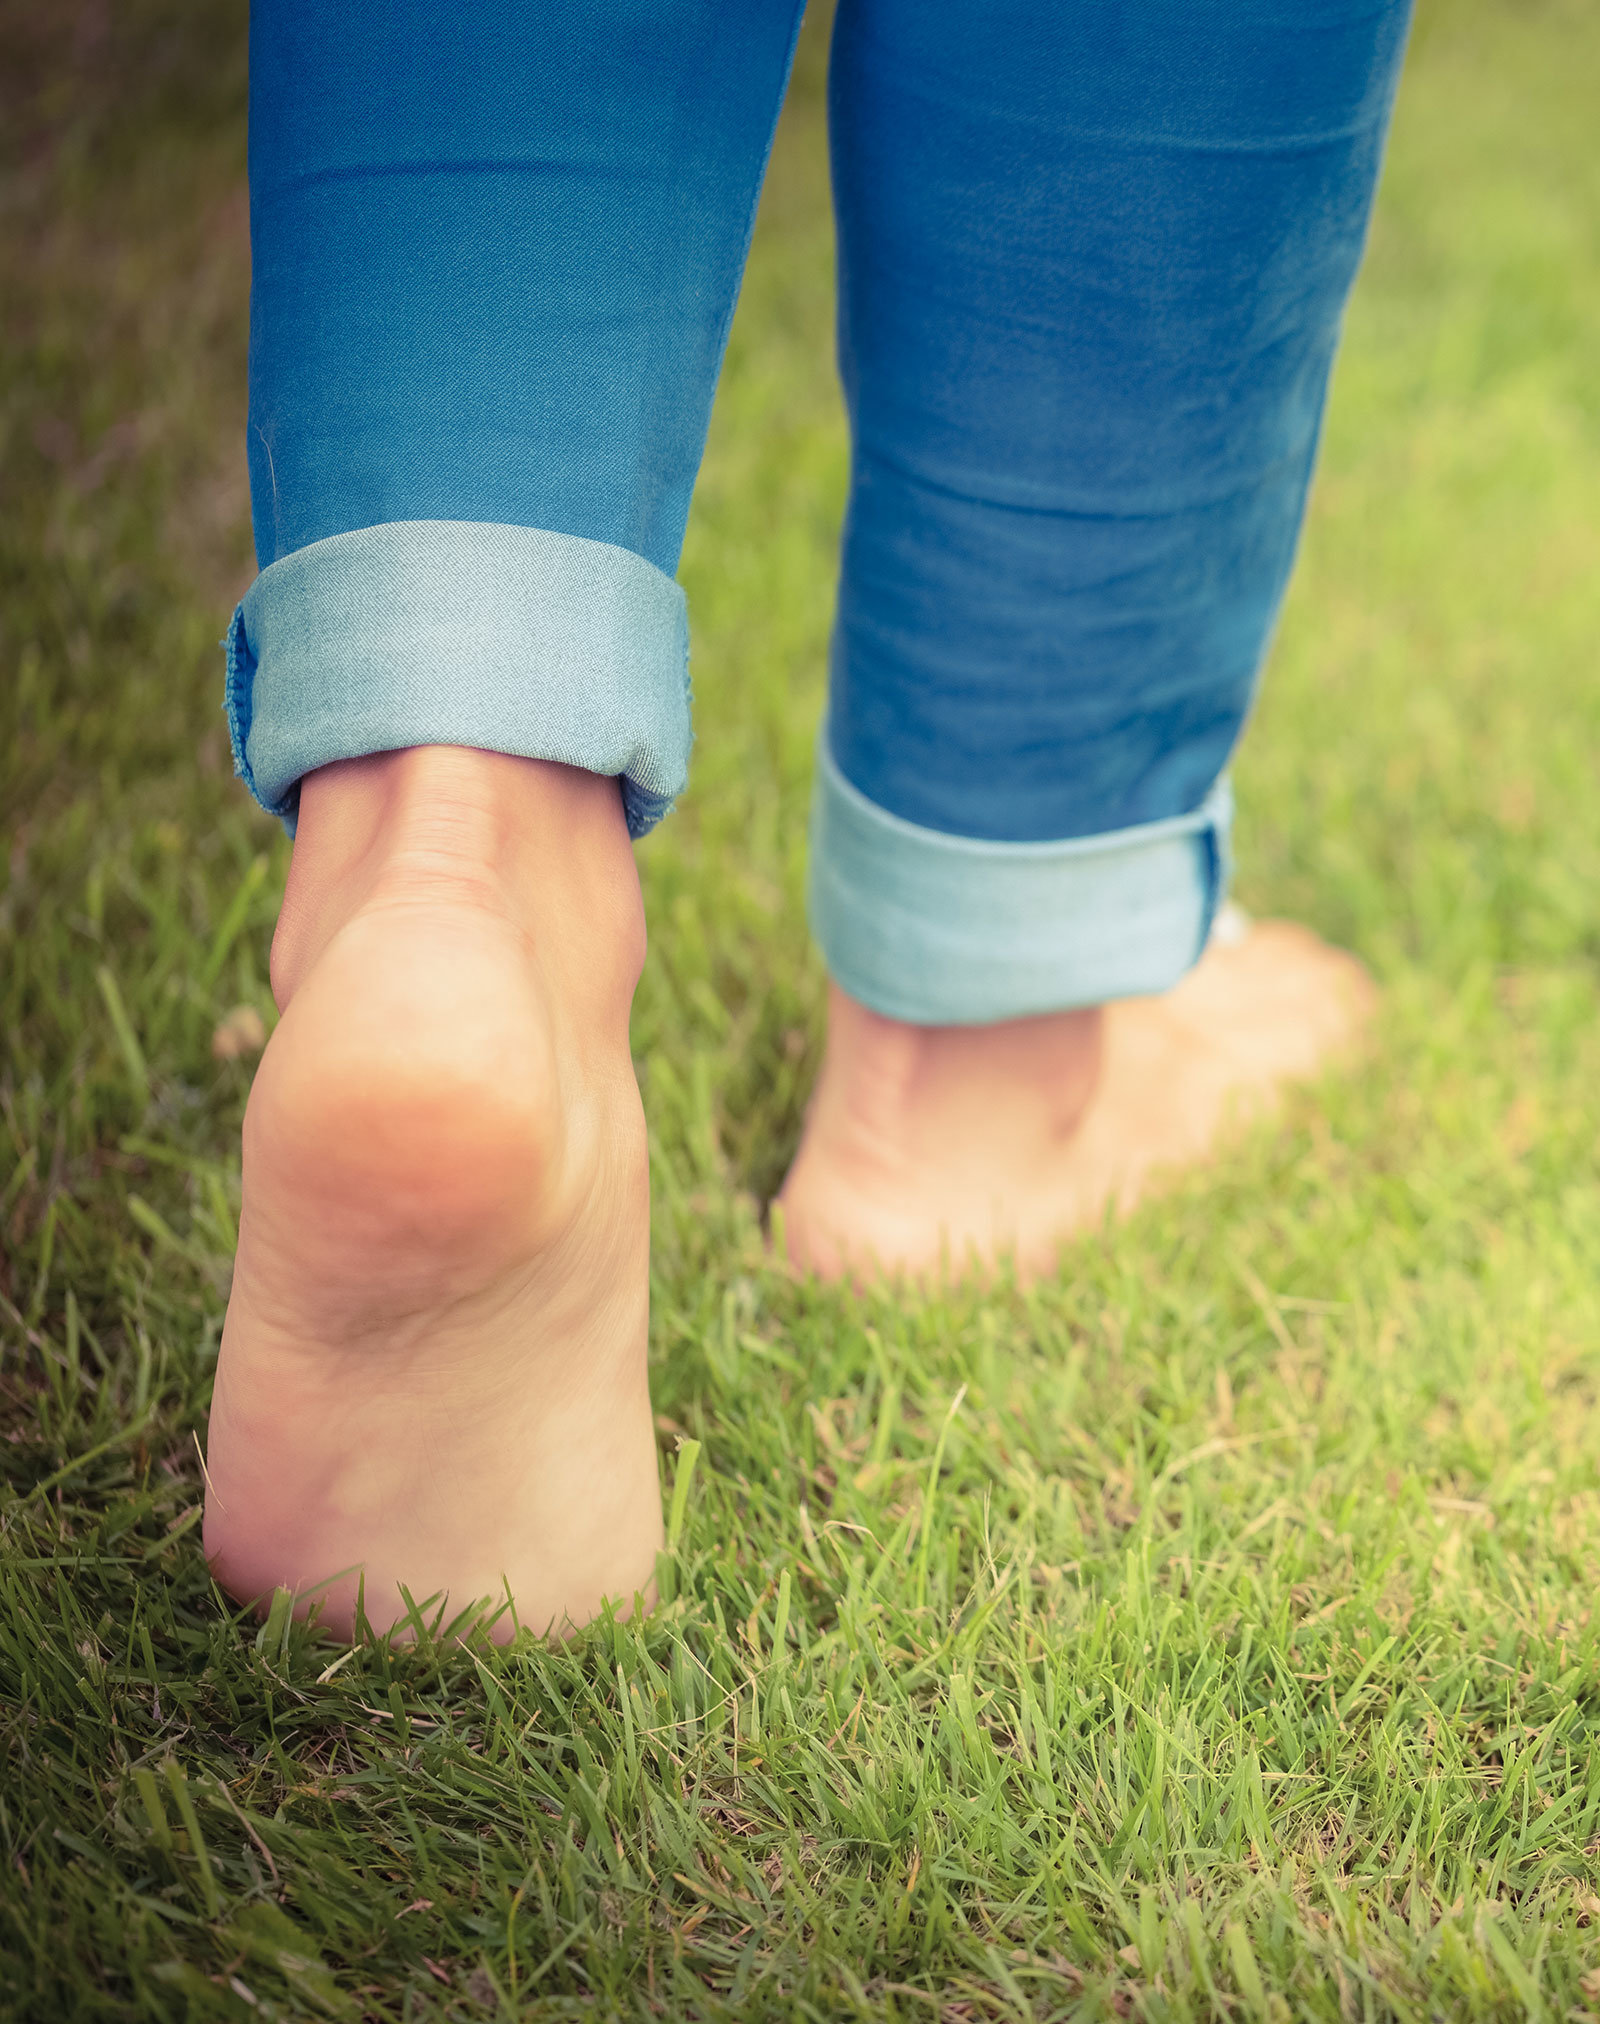 A woman's bare feet, walking on grass.